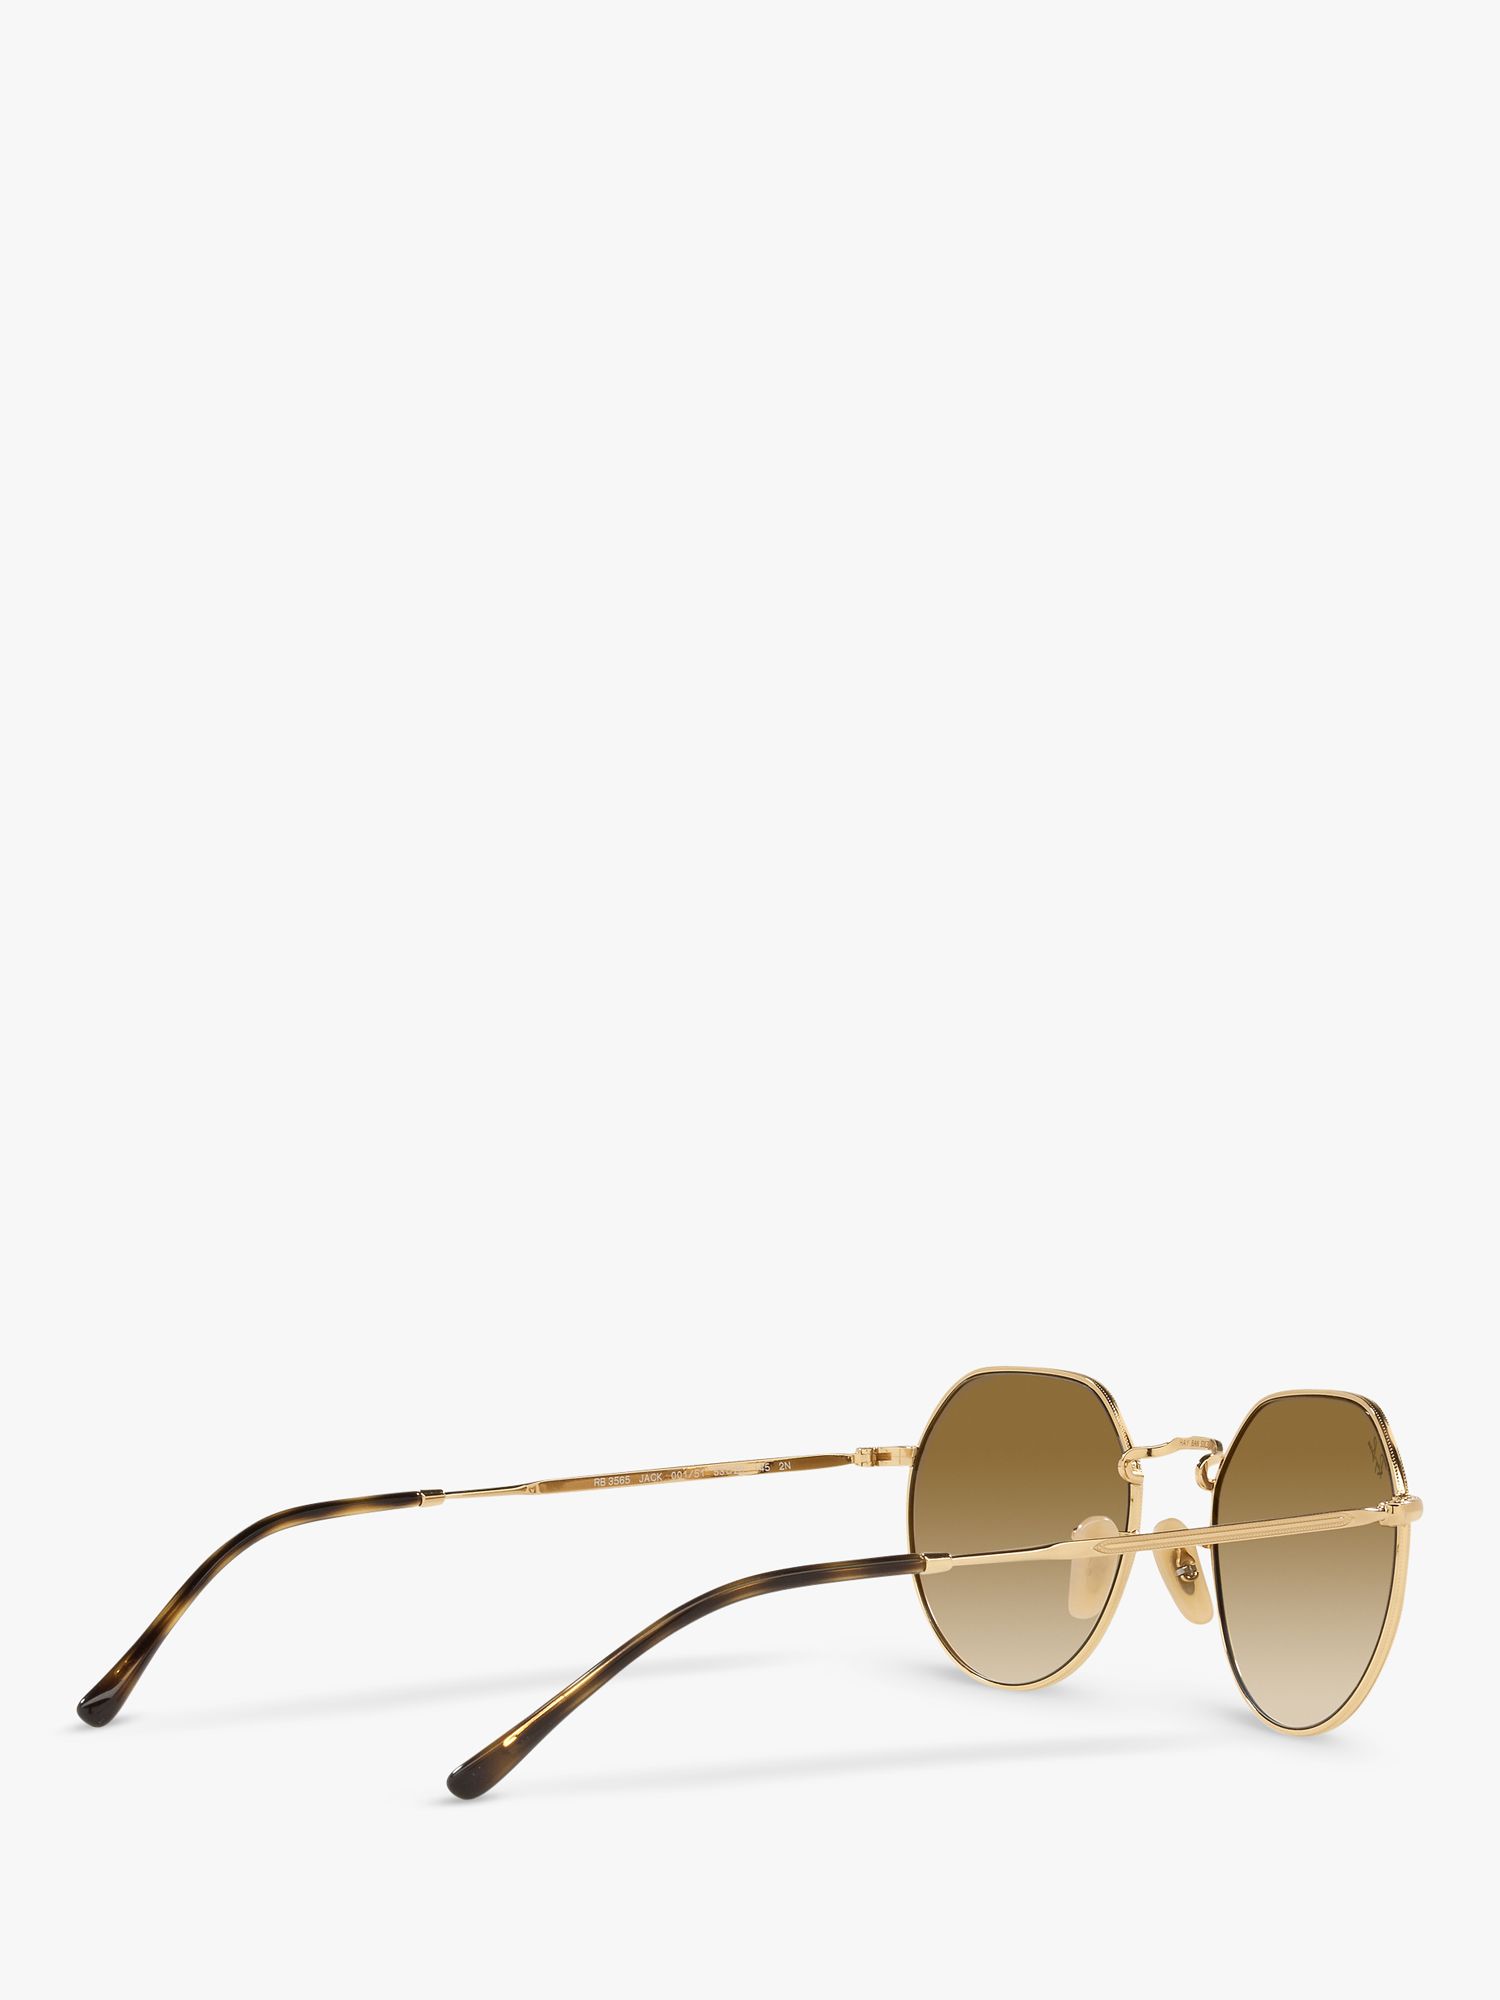 Ray-Ban RB3565 Jack Unisex Metal Hexagonal Sunglasses, Gold/Brown Gradient